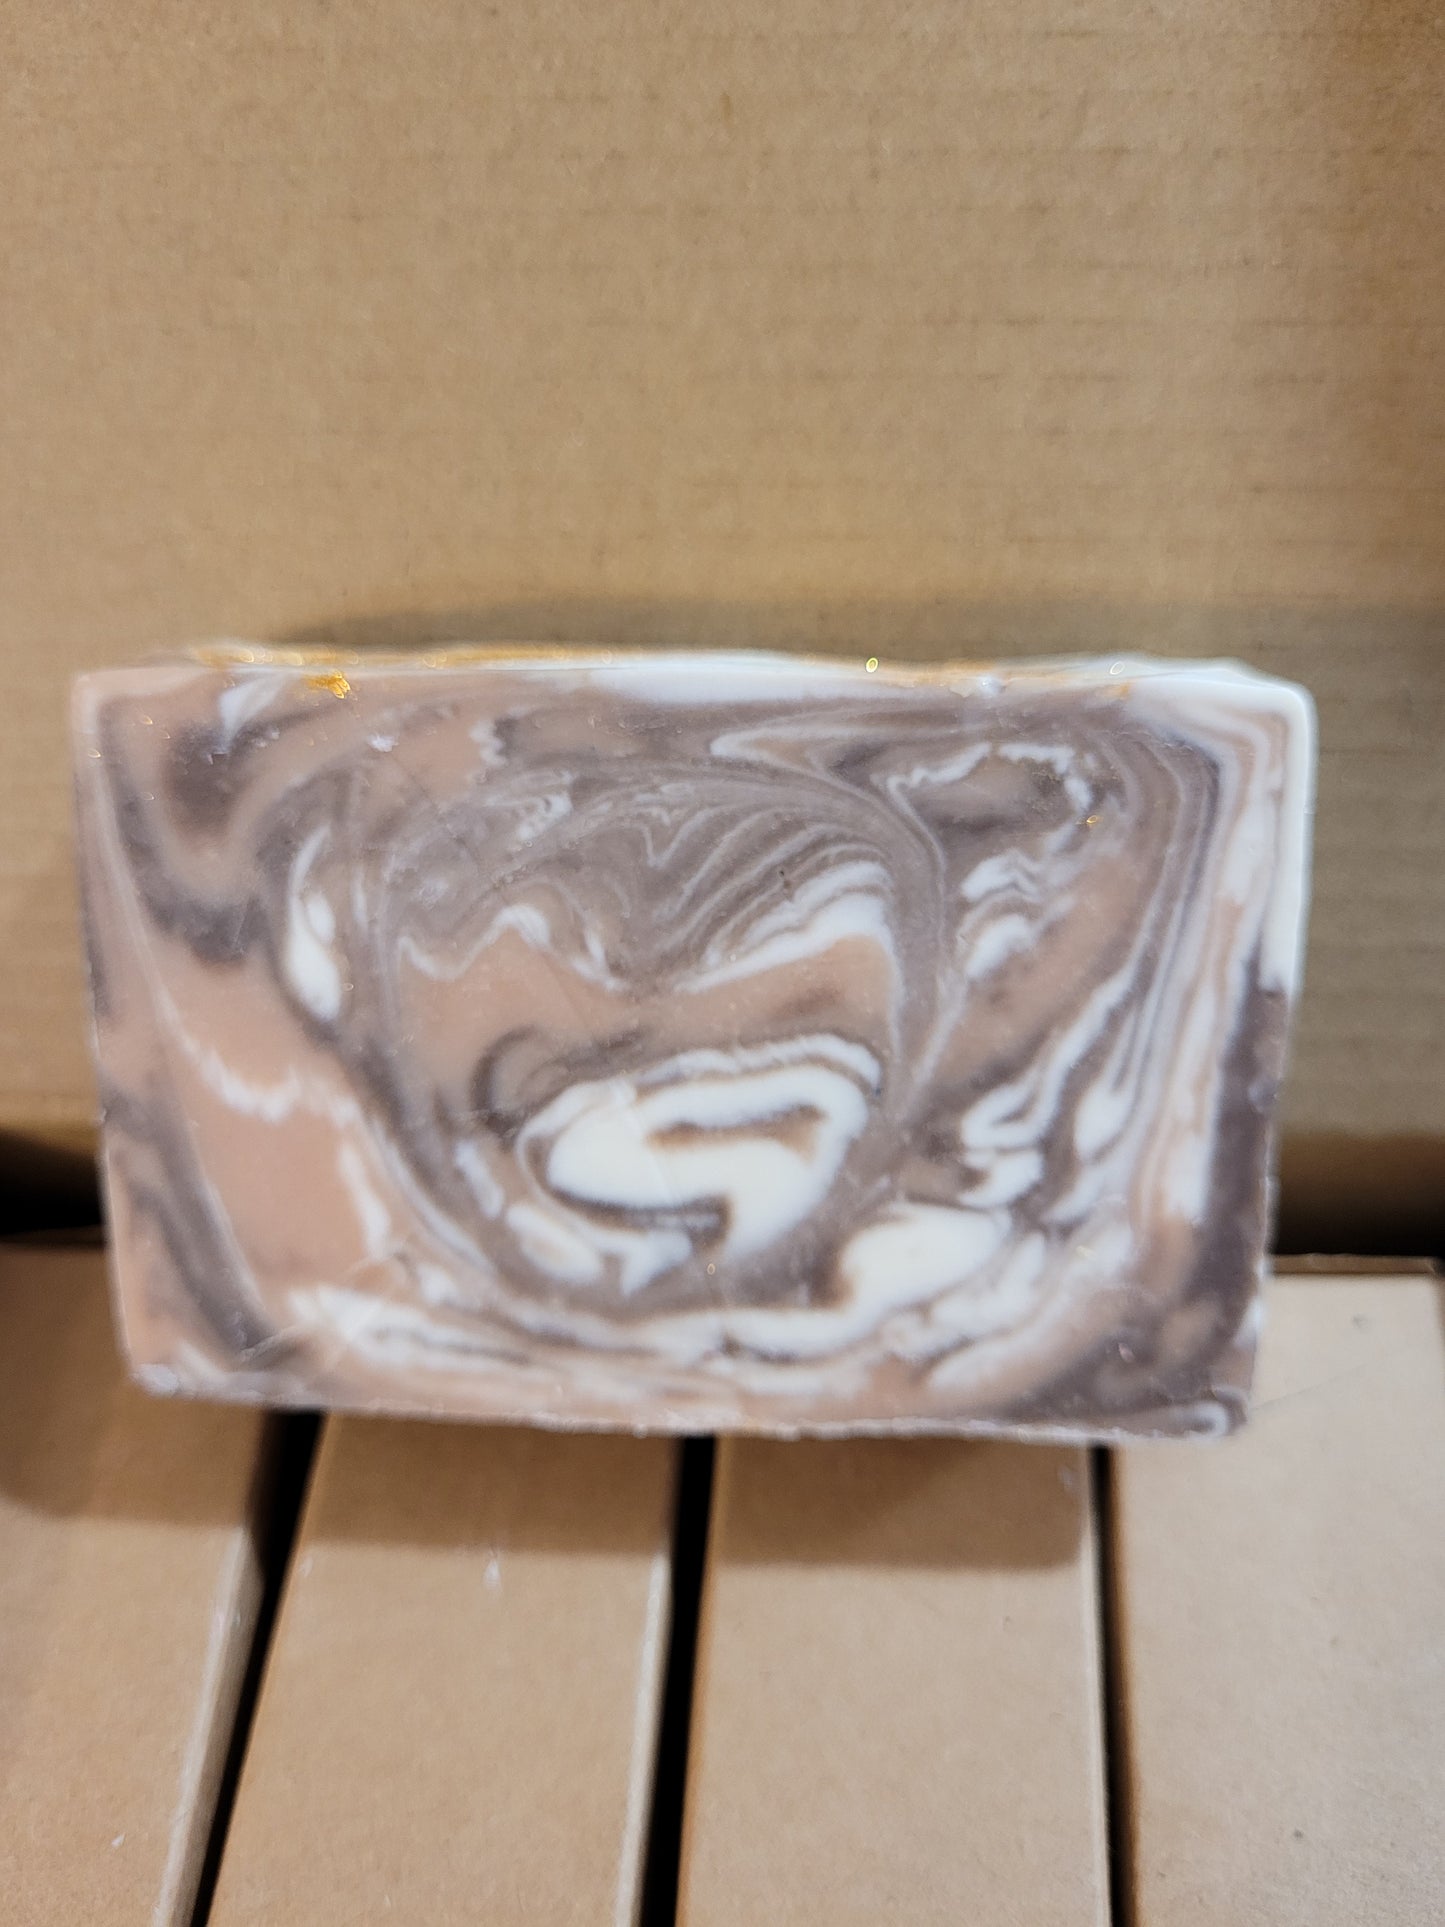 Variety Box of Soap